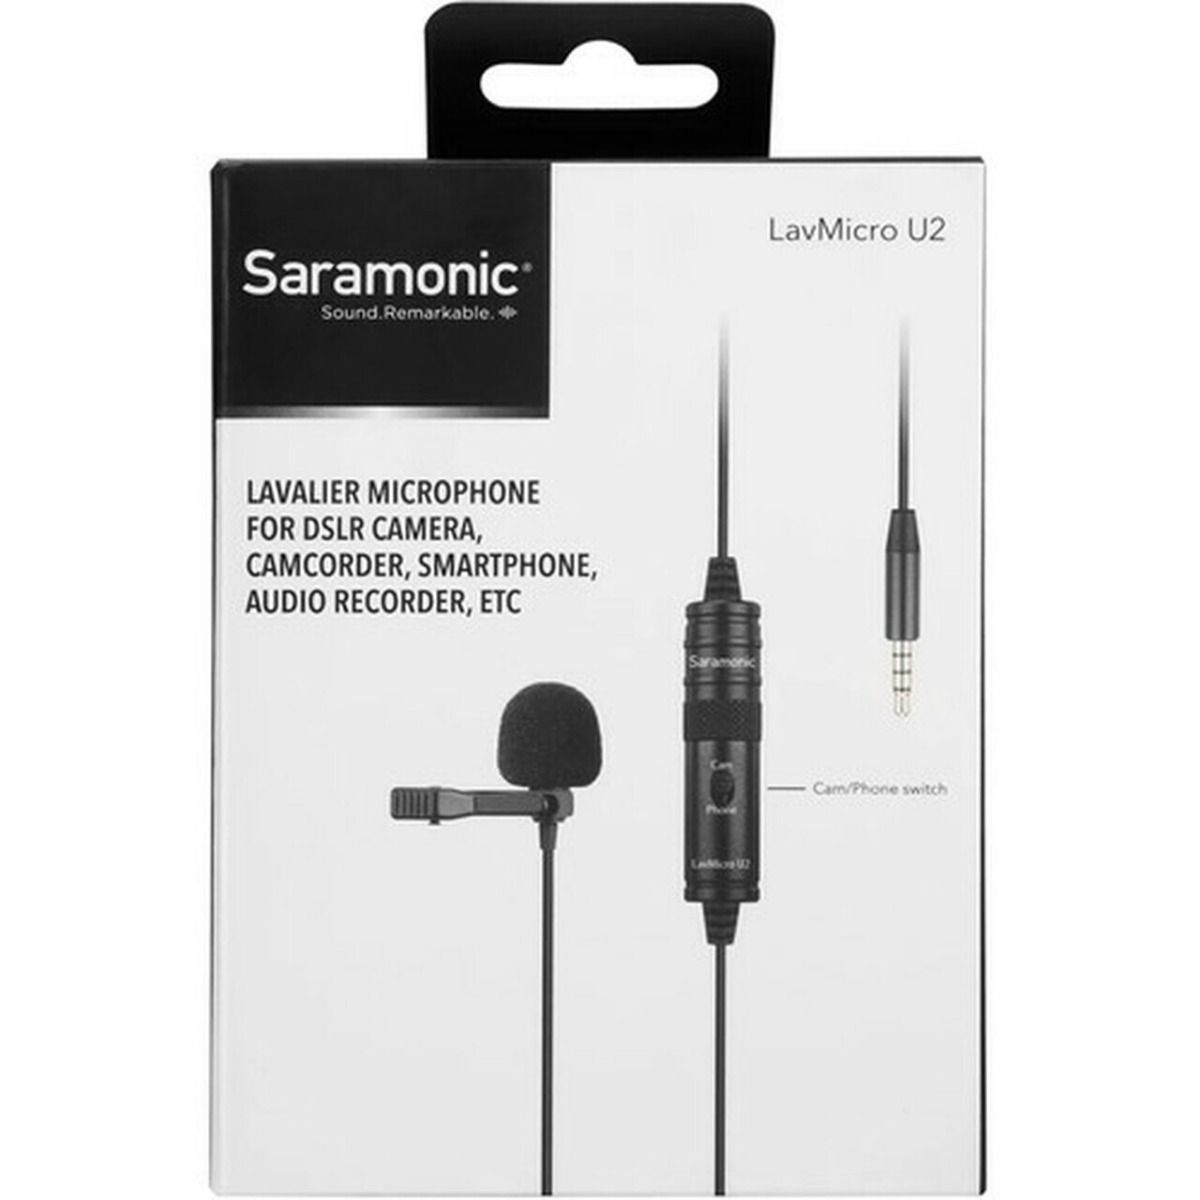 Saramonic LavMicro U2 Ultracompact Clip-On Lavalier Microphone